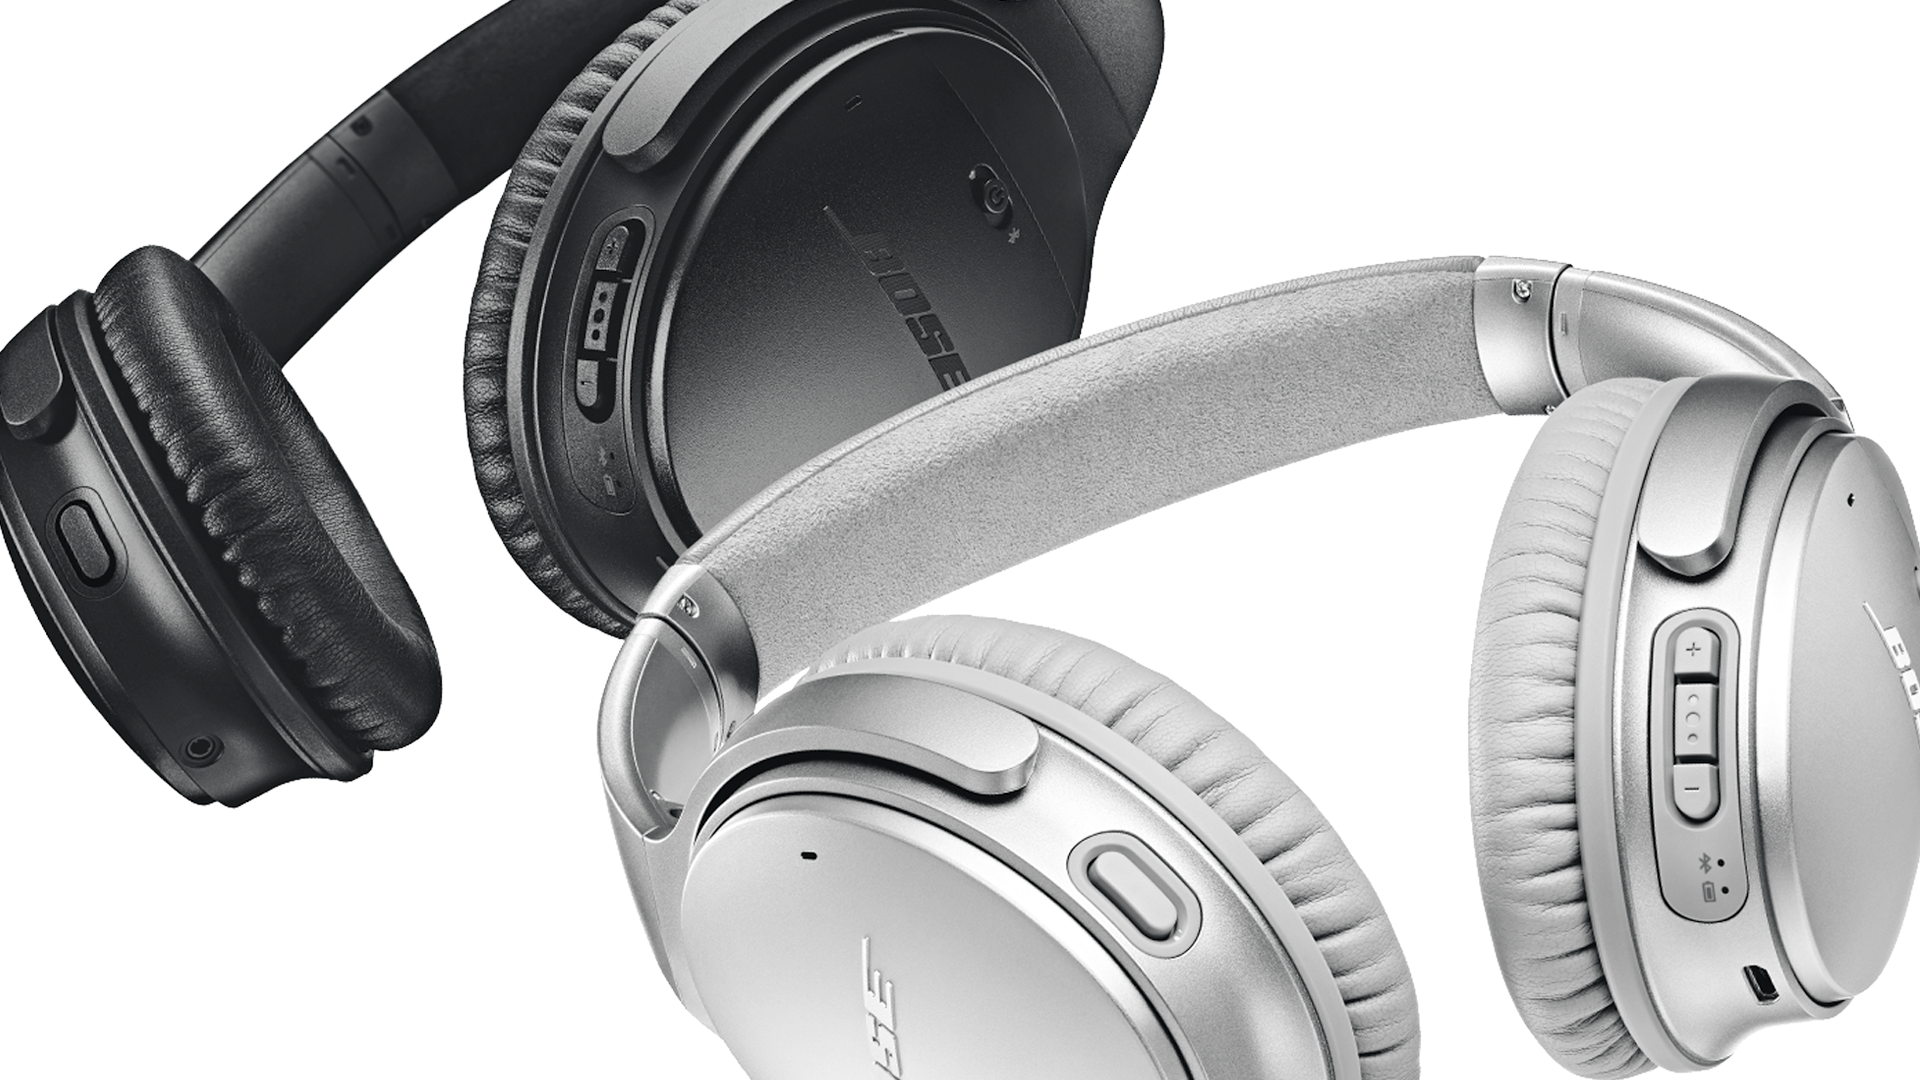 The Bose QuietComfort 35 II headphones in black and white.